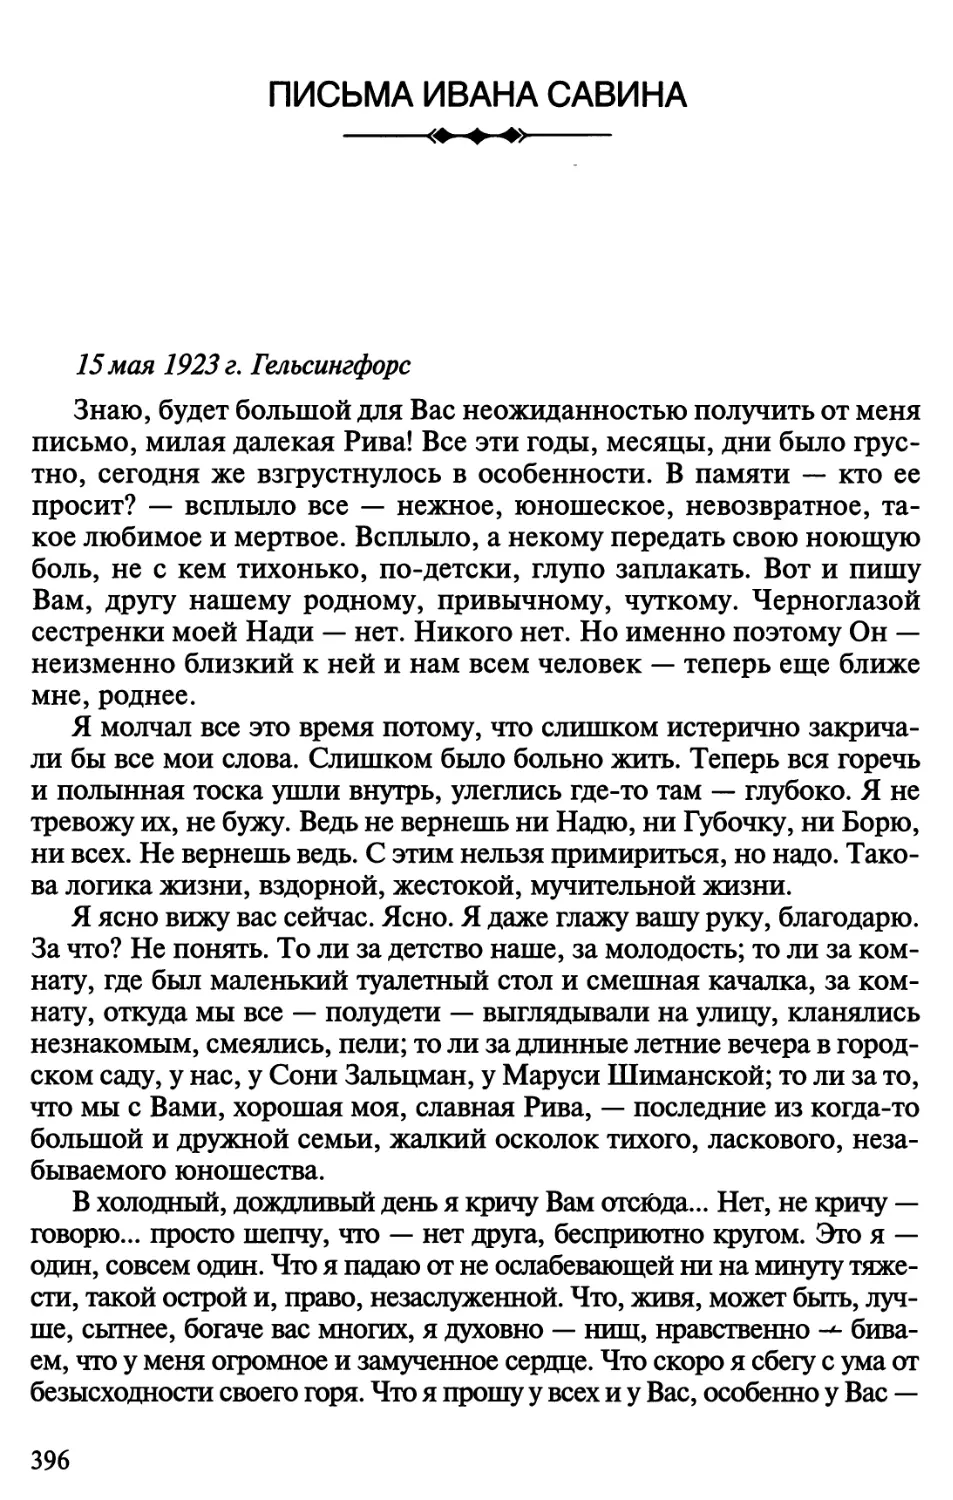 Письма Ивана Савина